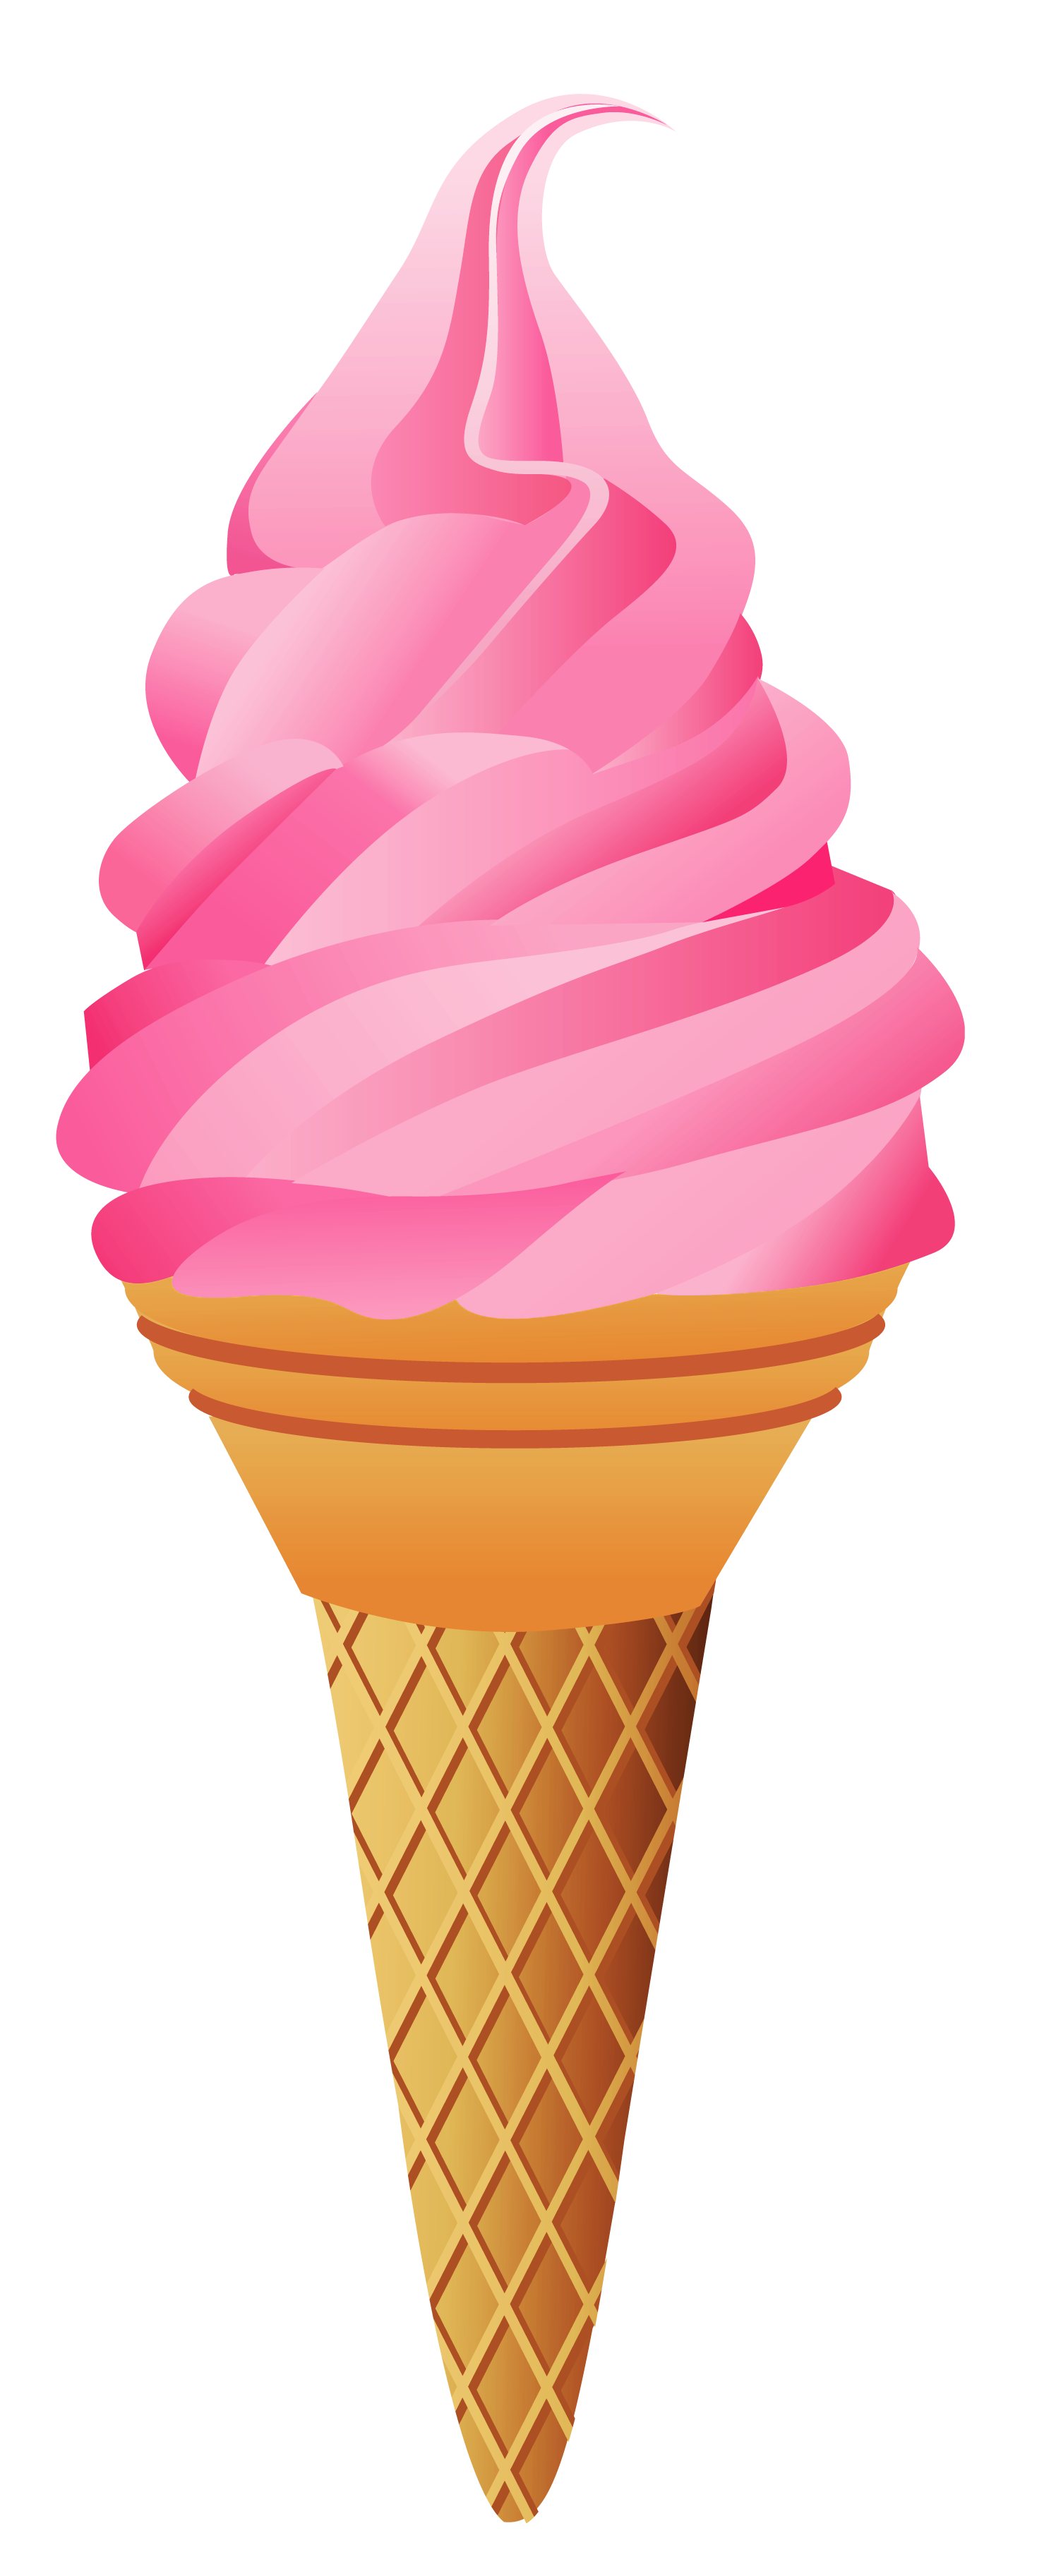 clipart of an ice cream cone - photo #43